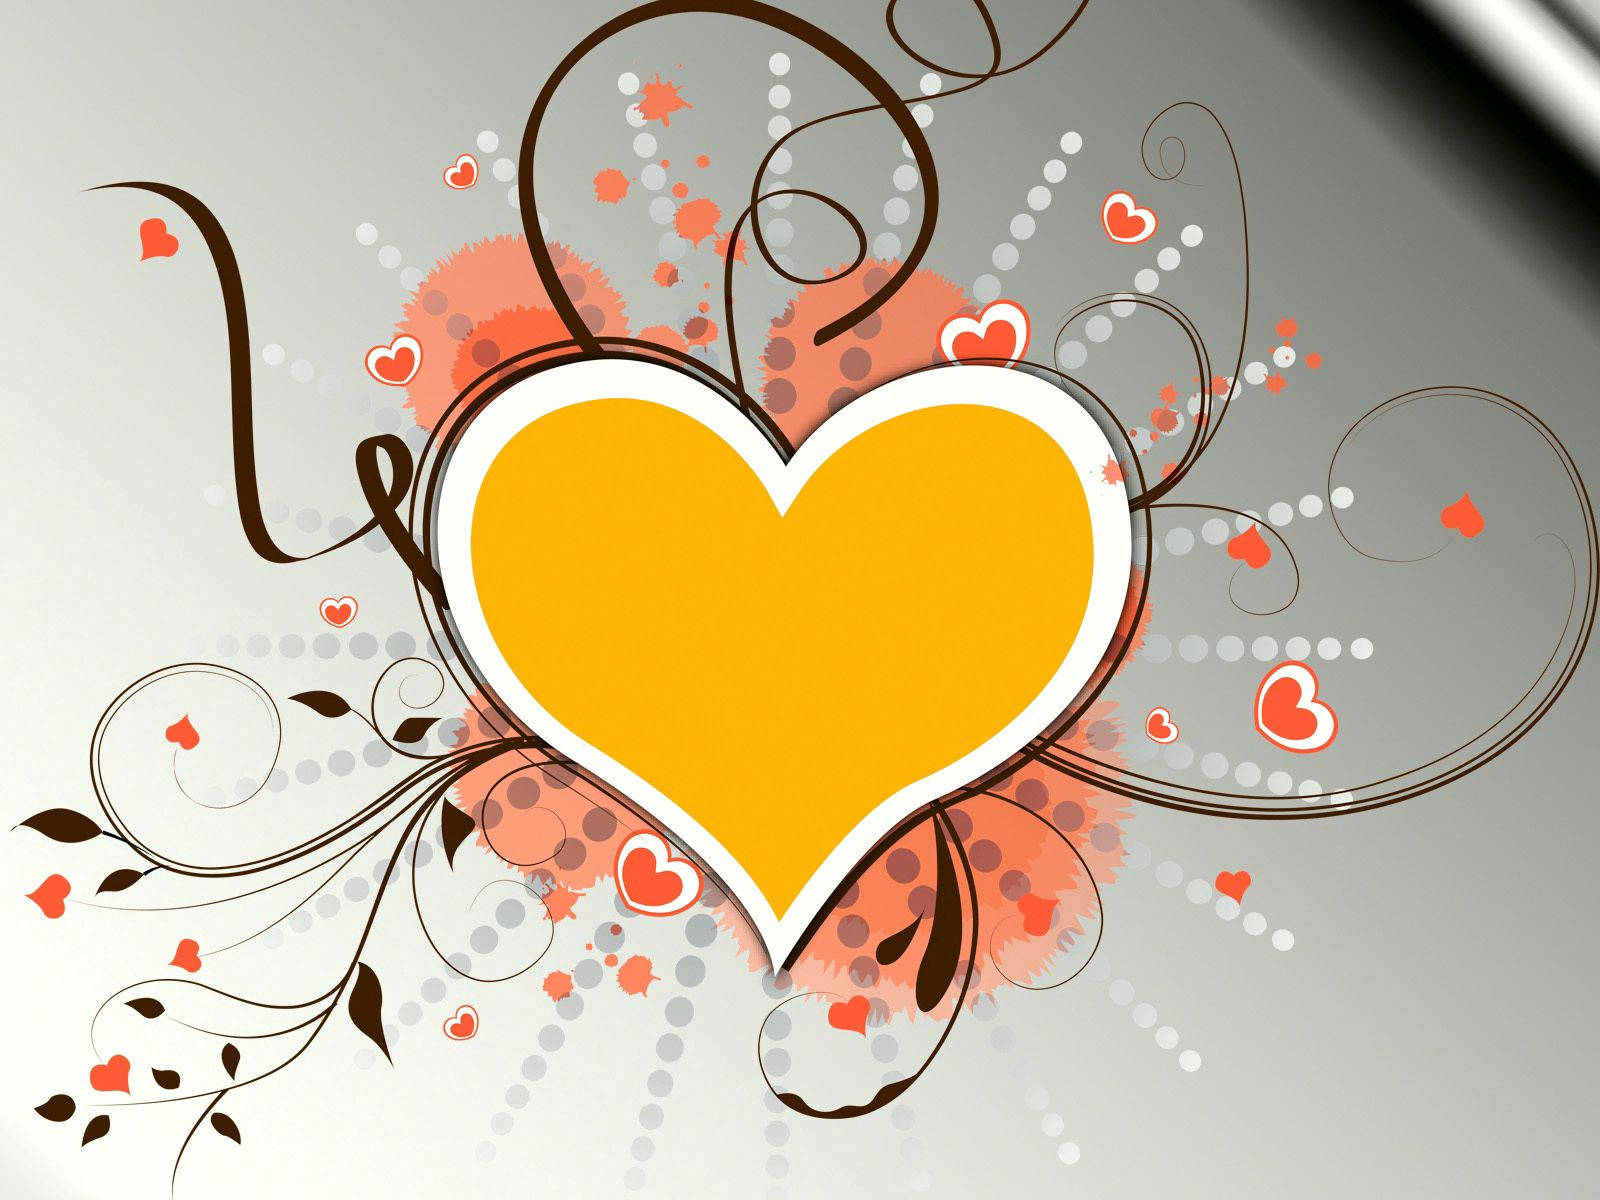 Vibrant Yellow Heart with Fancy Art Design Wallpaper